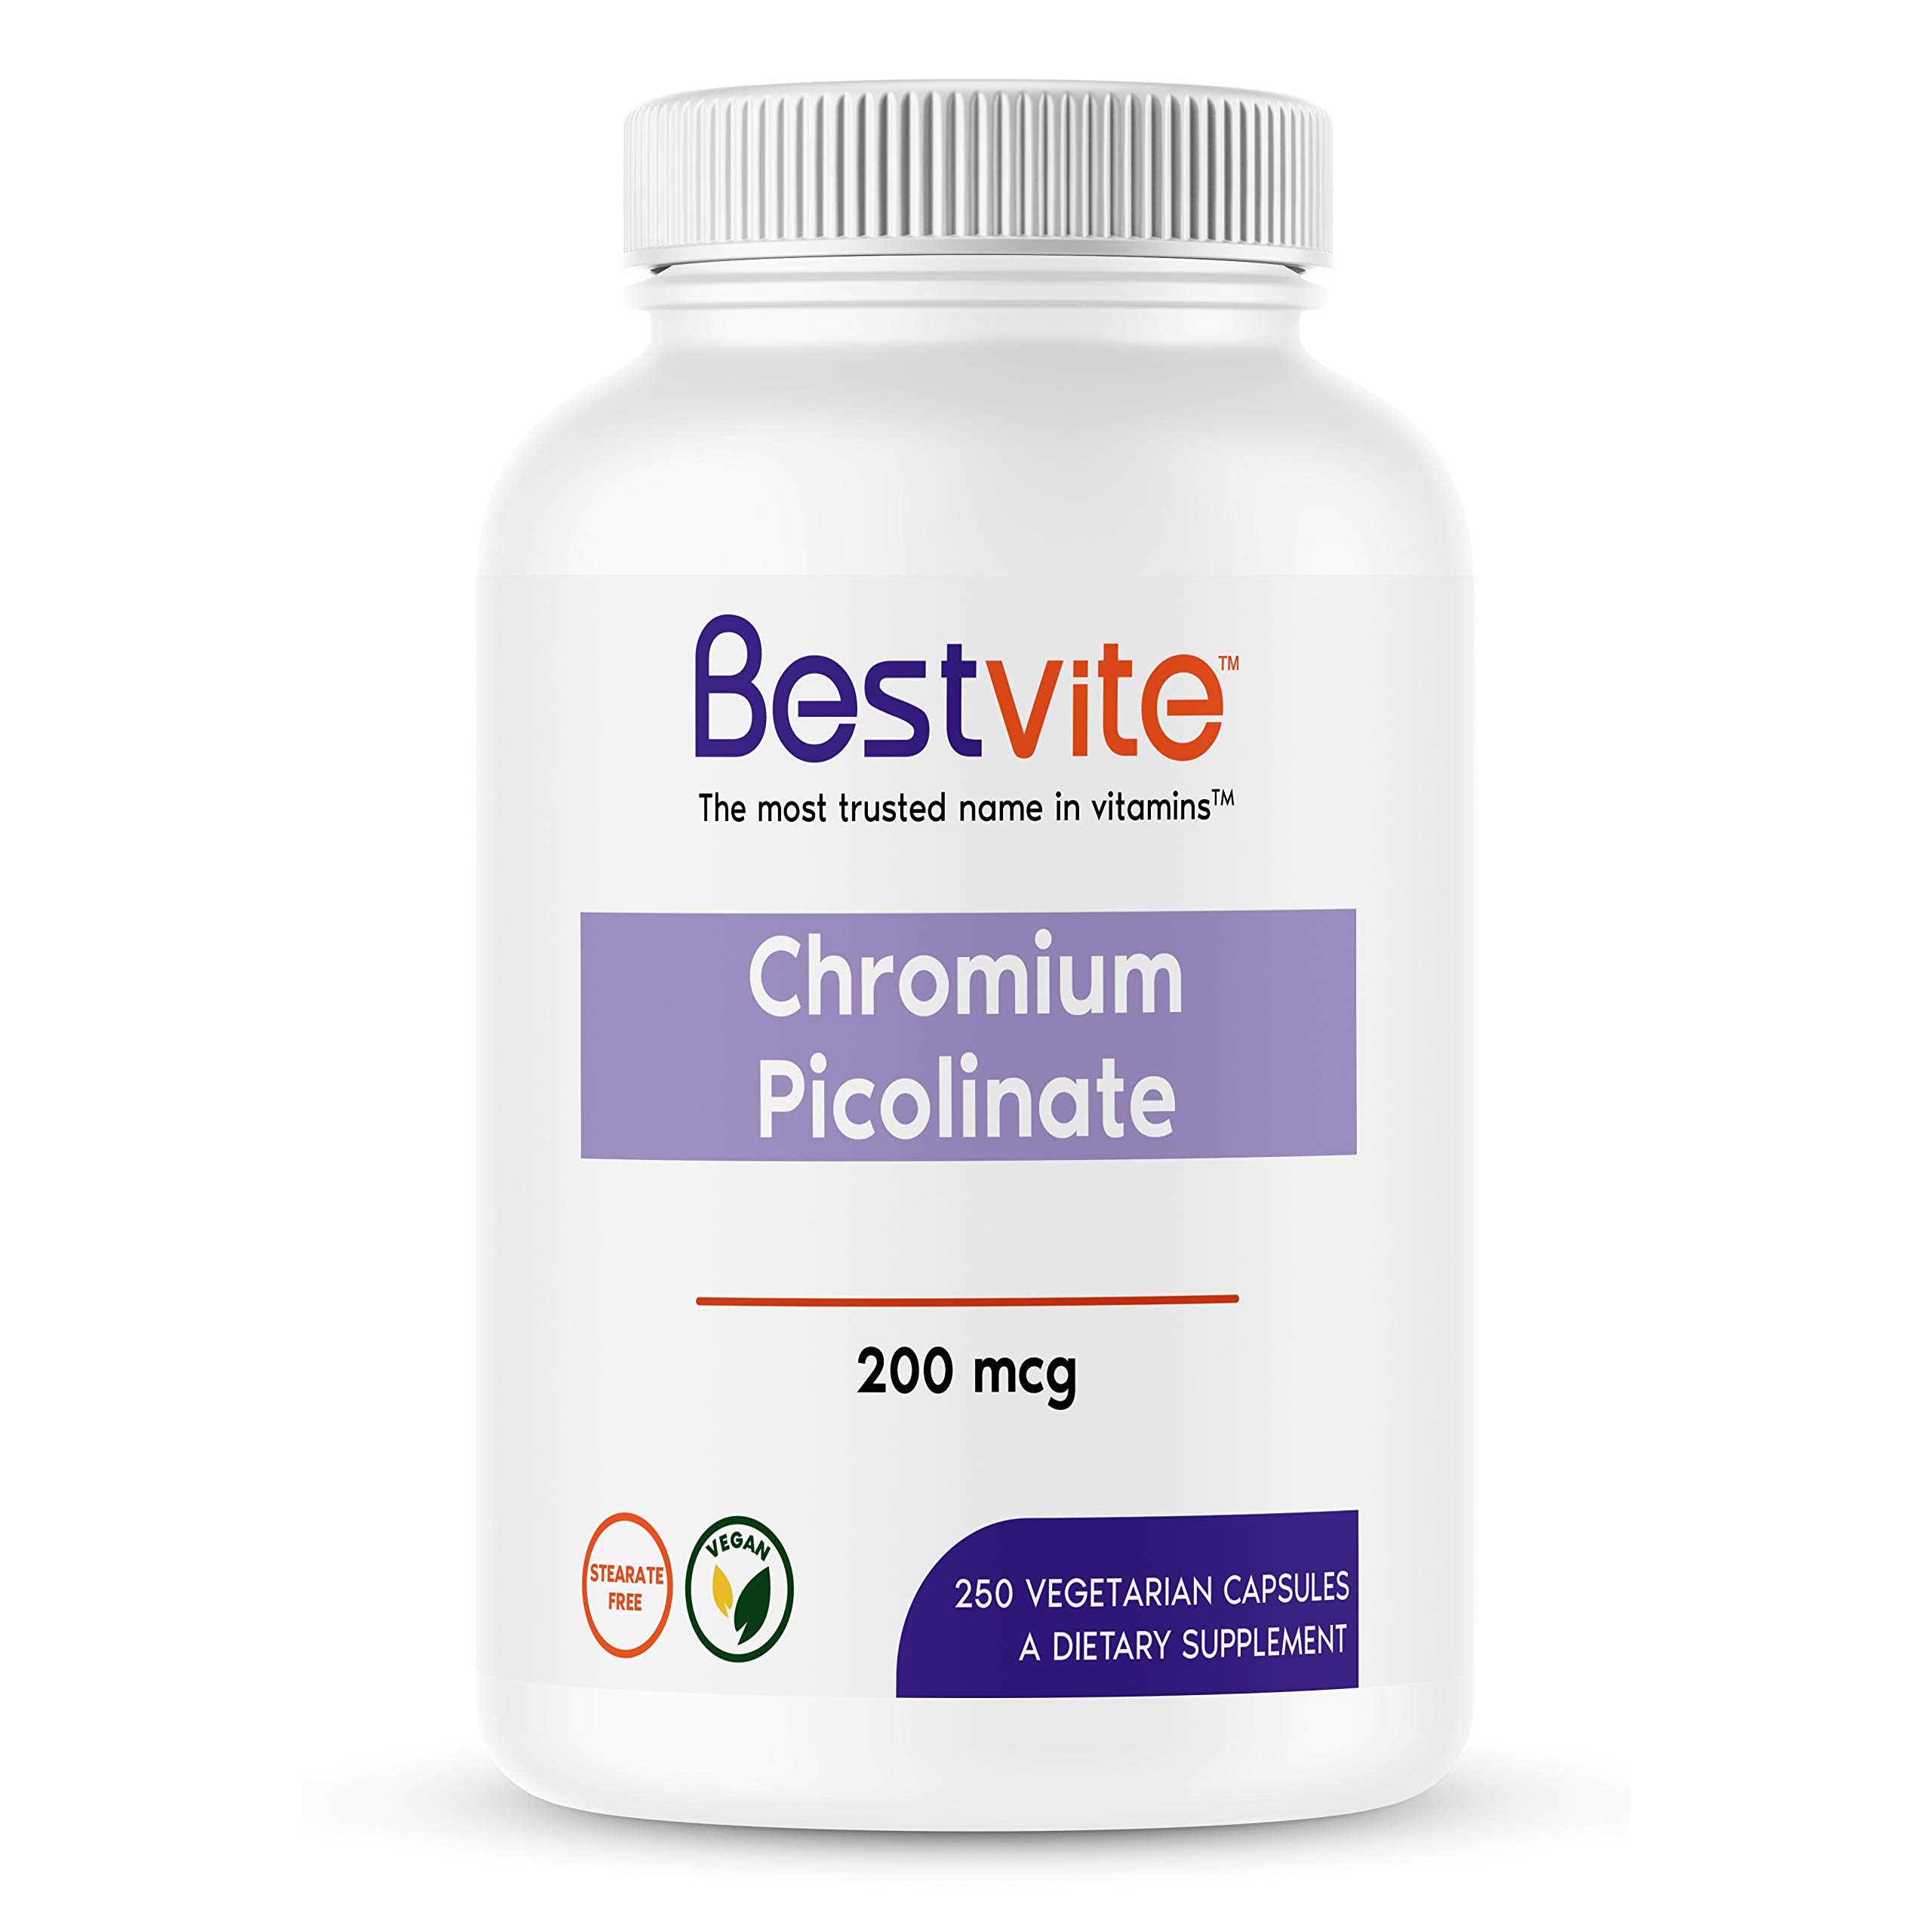 Bestvite Chromium Picolinate 200mcg (250 Vegetarian Capsules) - No Stearates - No Flow Agents - Vegan - Gluten Free - Non GMO